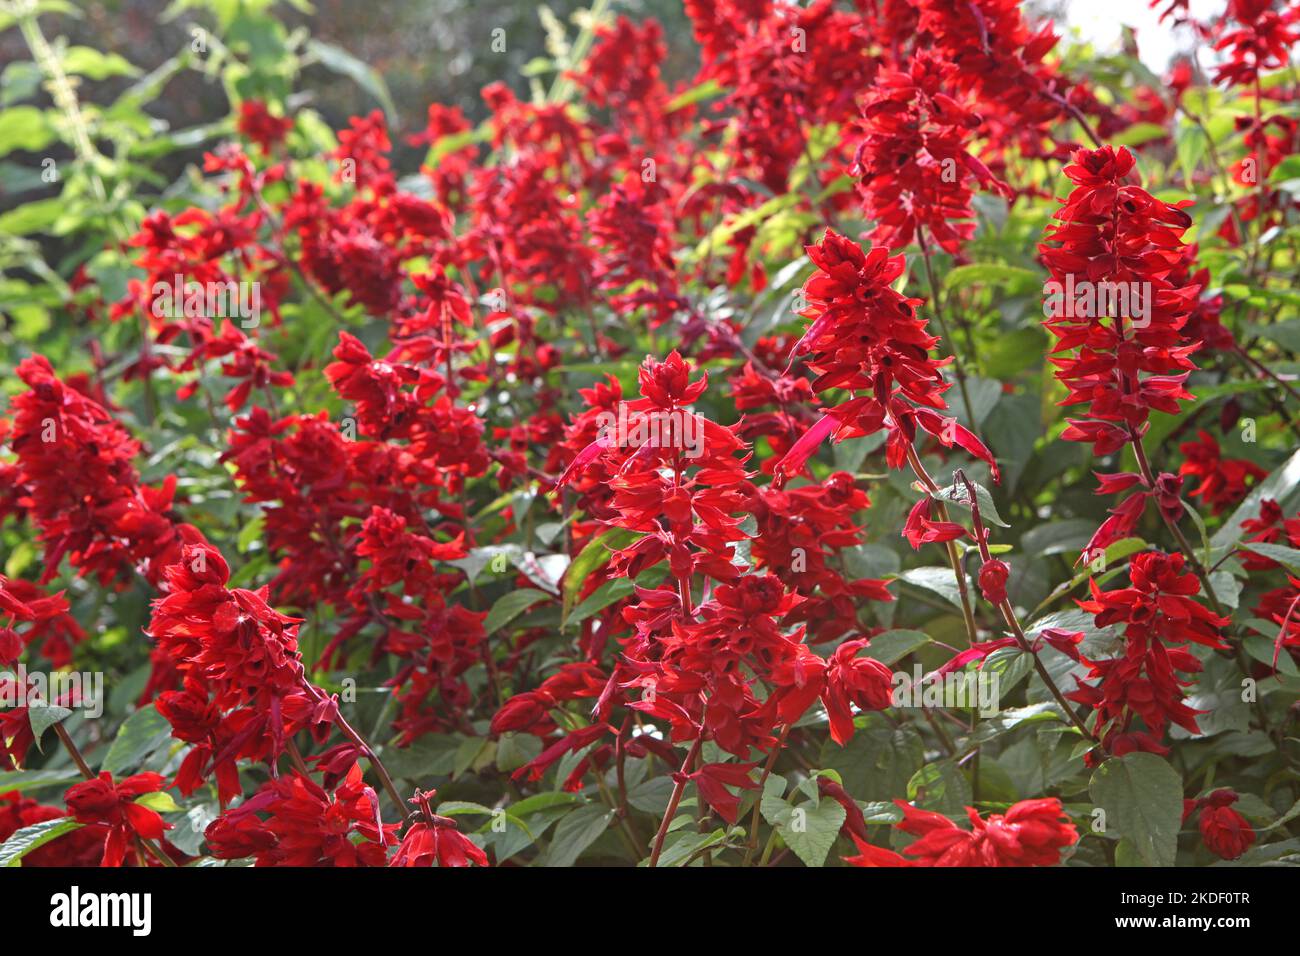 Salvia splendens 'Jimi's Good Red' in flower. Stock Photo